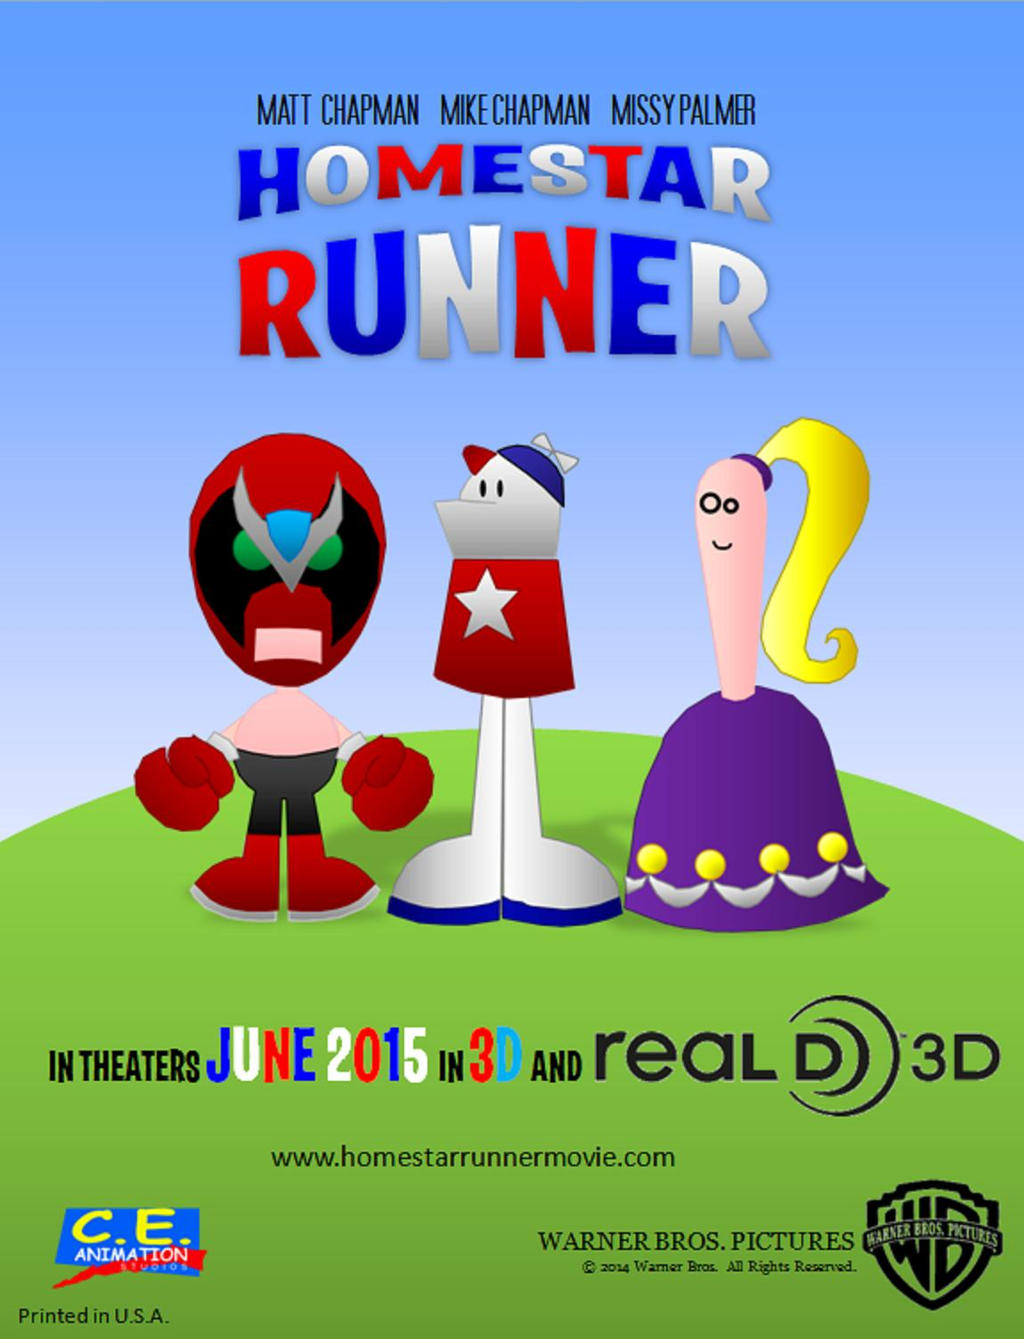 Homestar Runner (2015) Movie Teaser Poster by RobbbieFactor on DeviantArt1024 x 1339